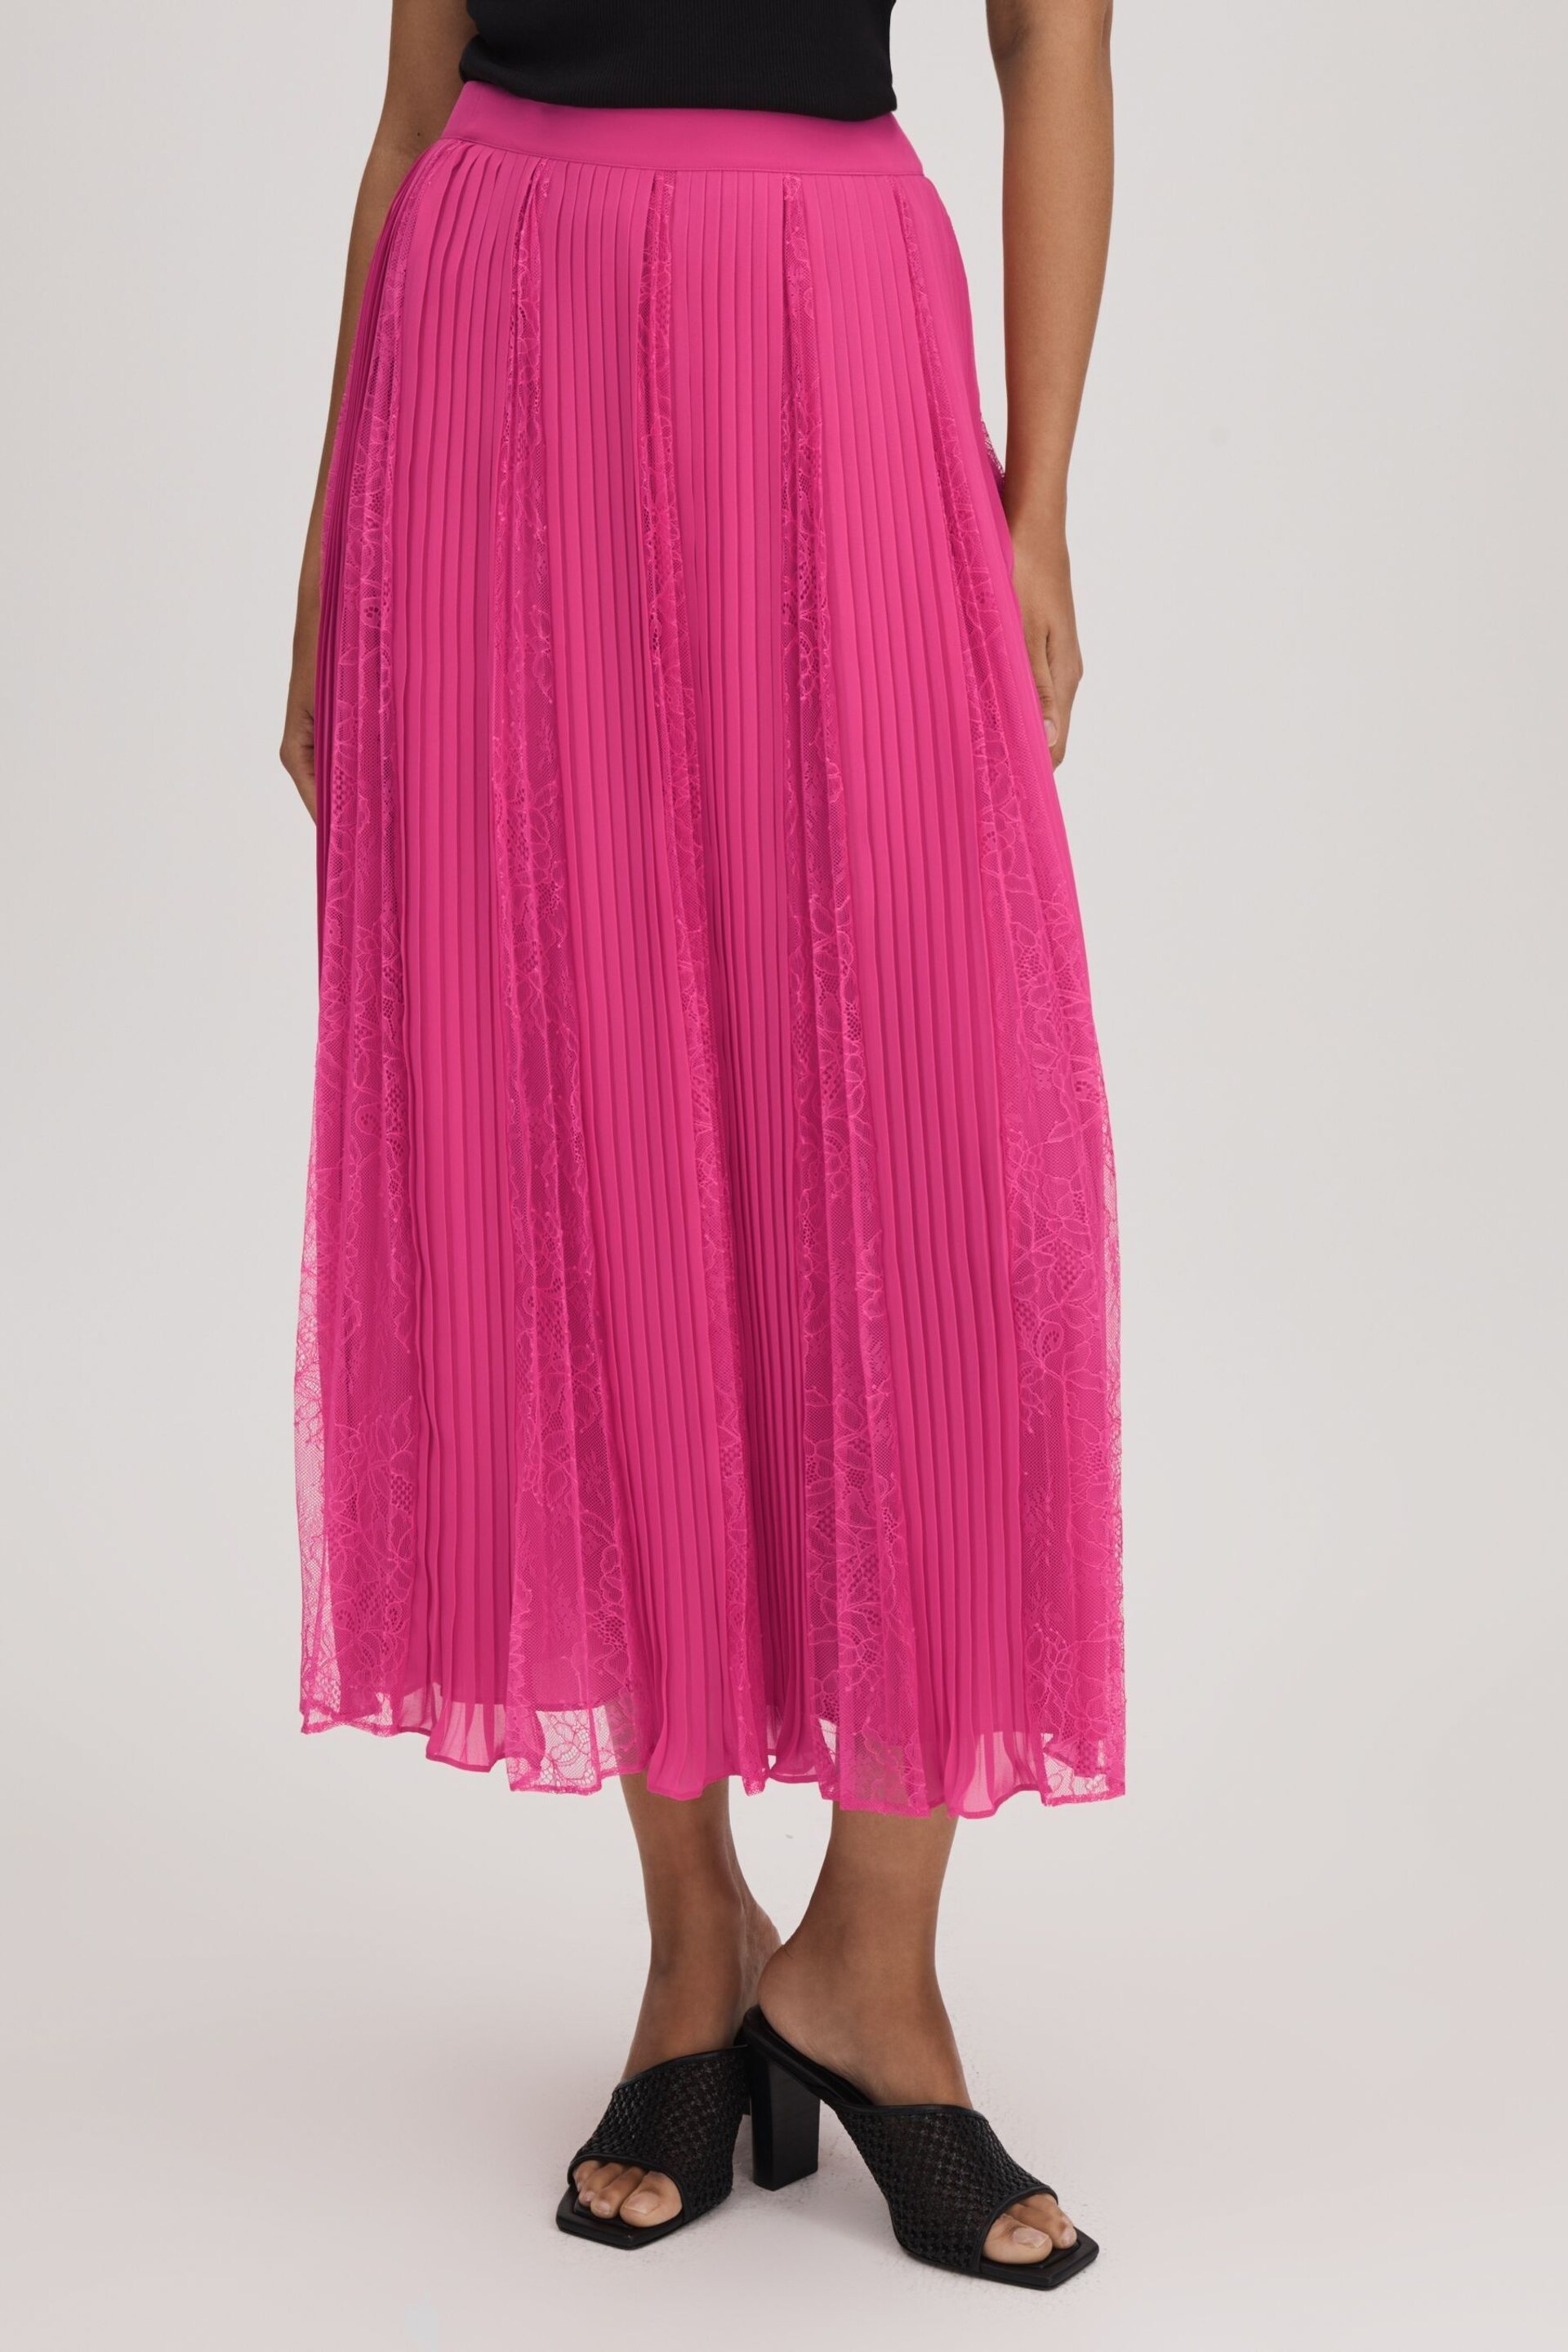 Florere Lace Pleated Midi Skirt - Image 4 of 6